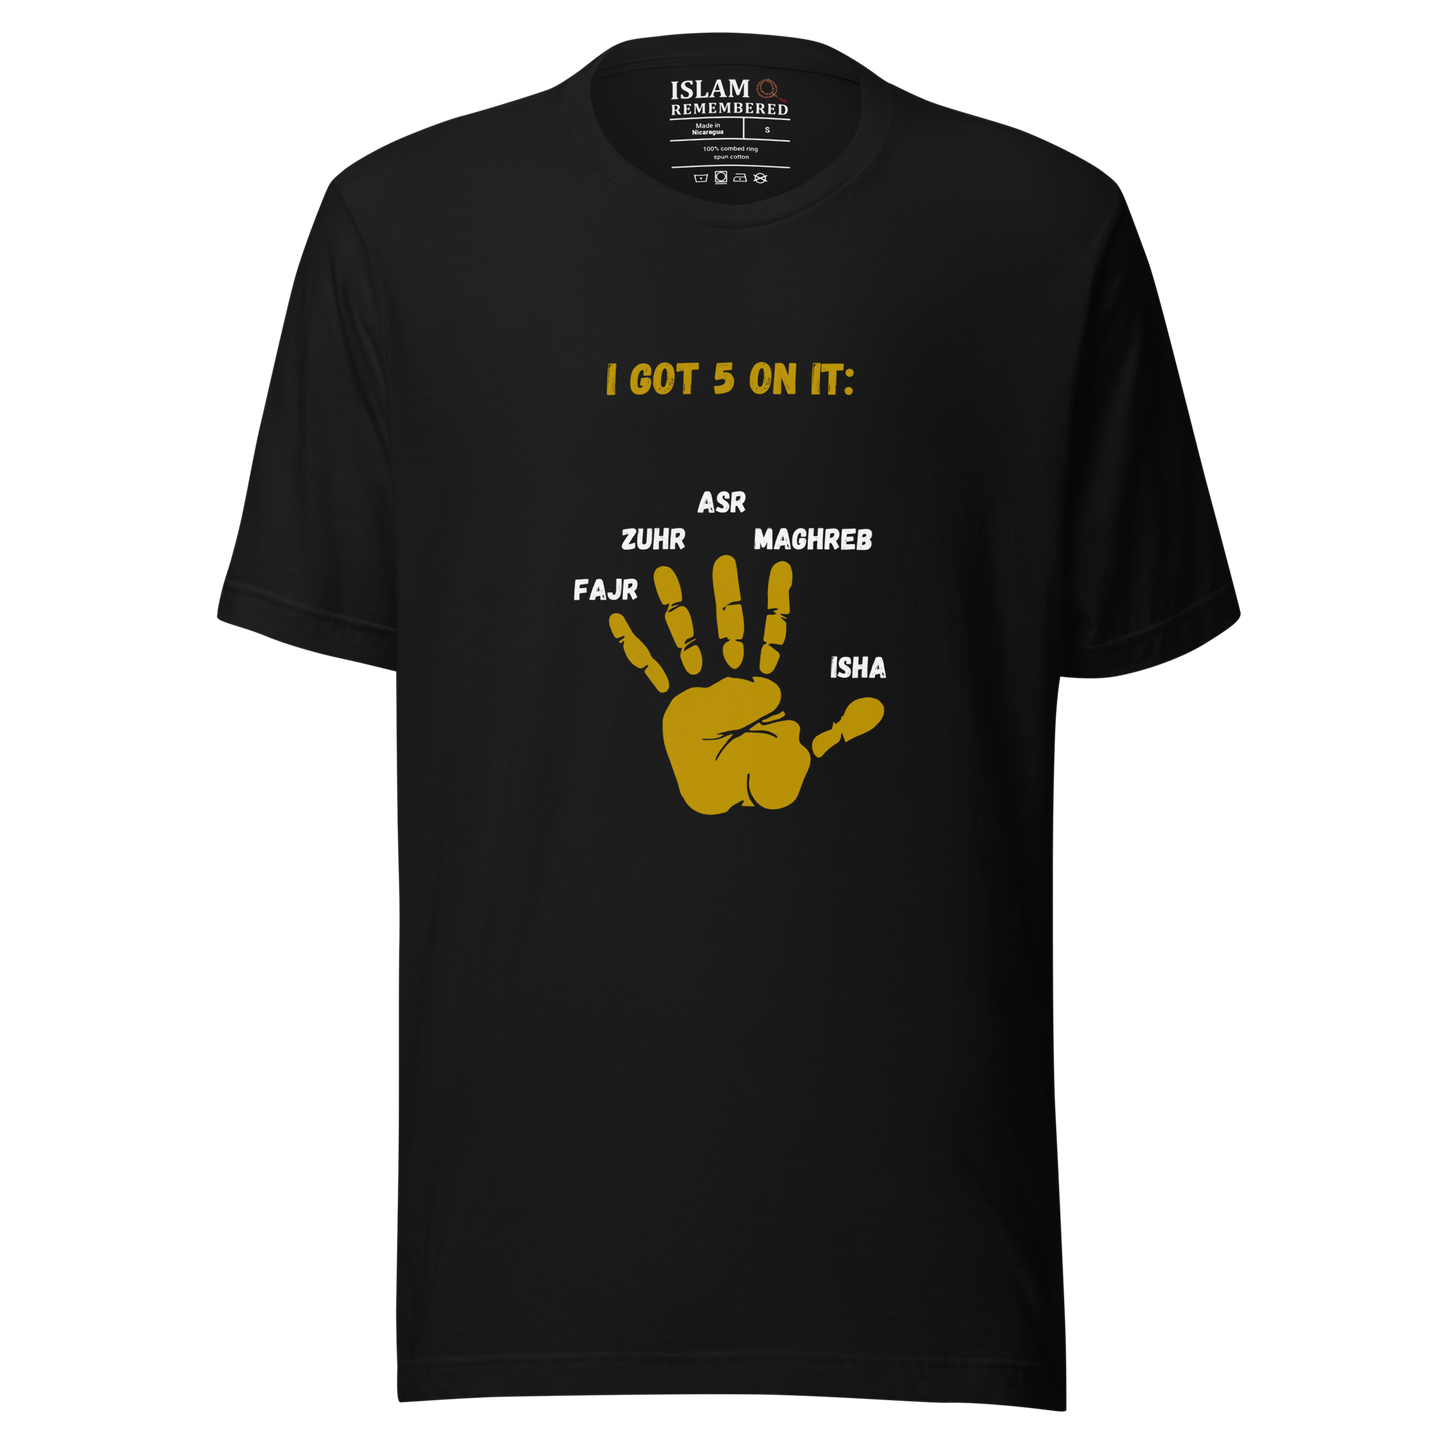 WOMEN's T-Shirt - I GOT 5 ON IT - Gold/Black